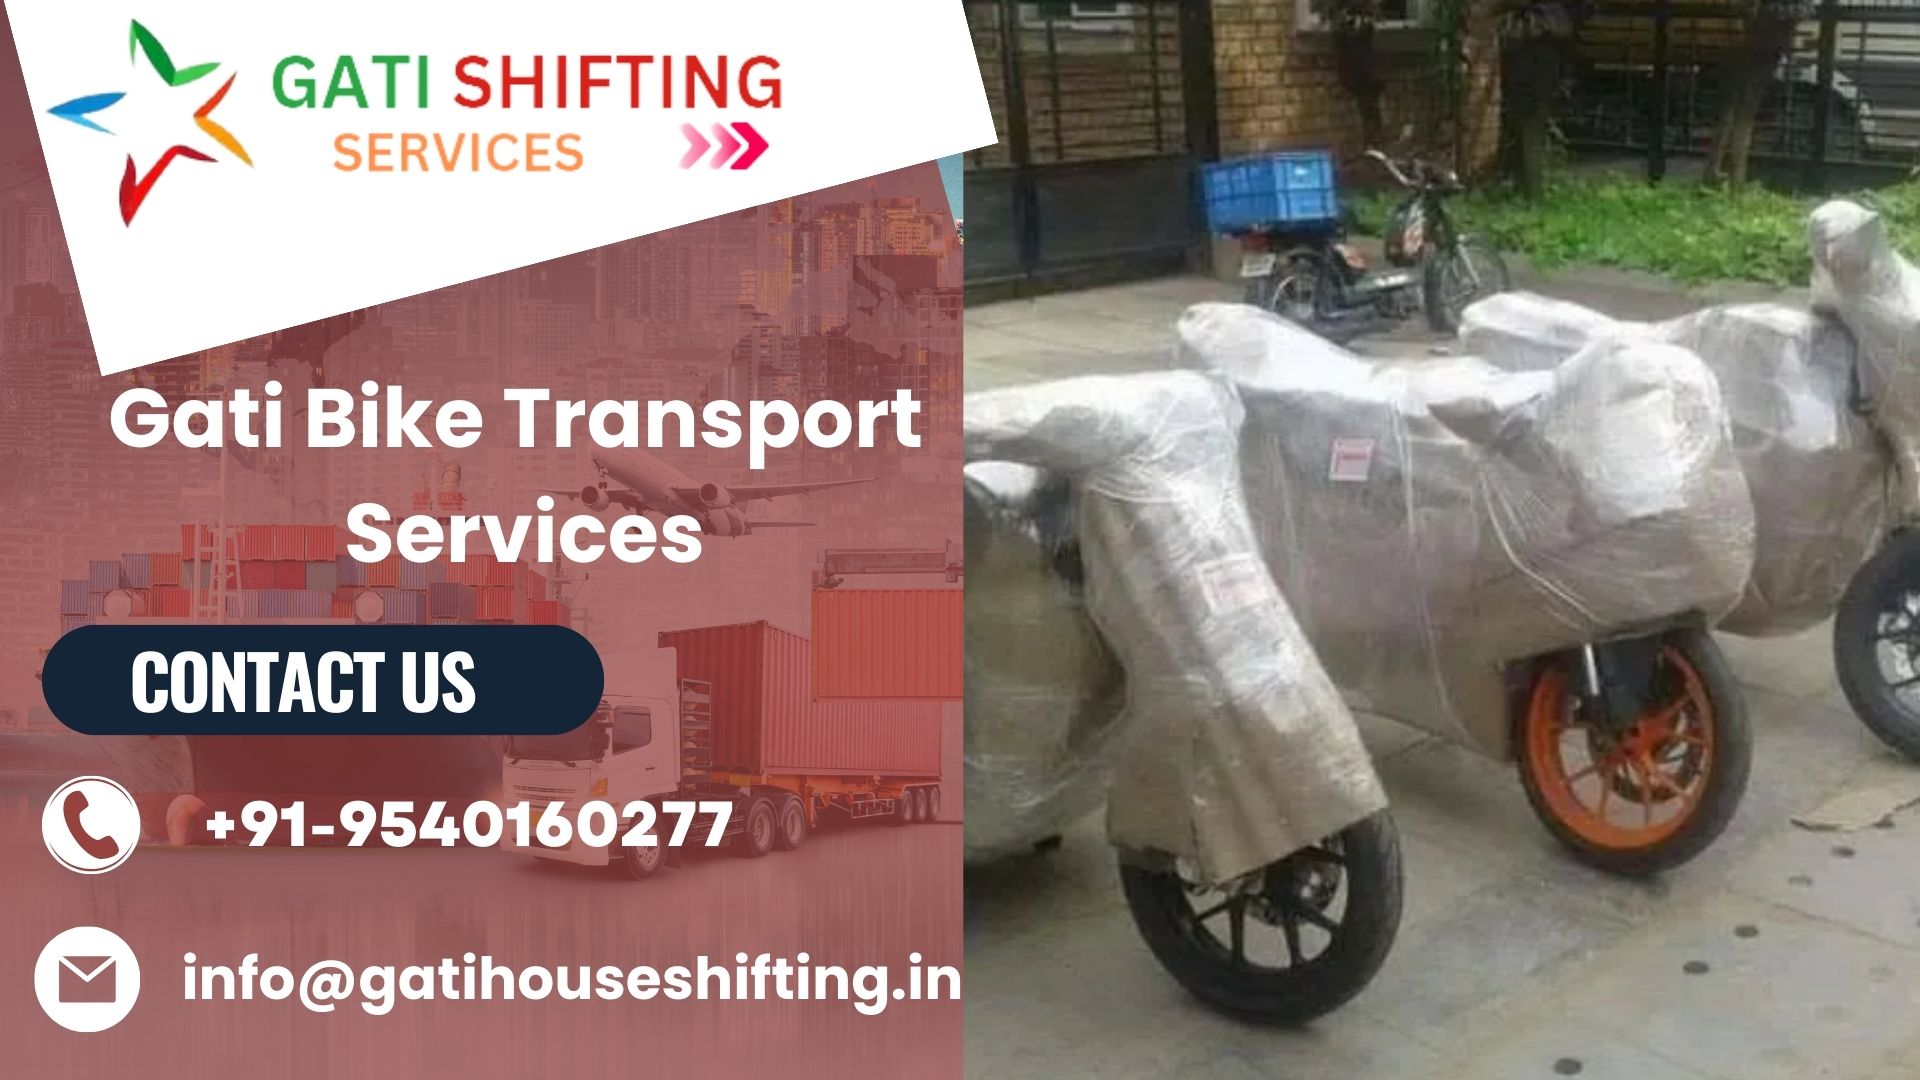 Gati bike transport service in Chandigarh